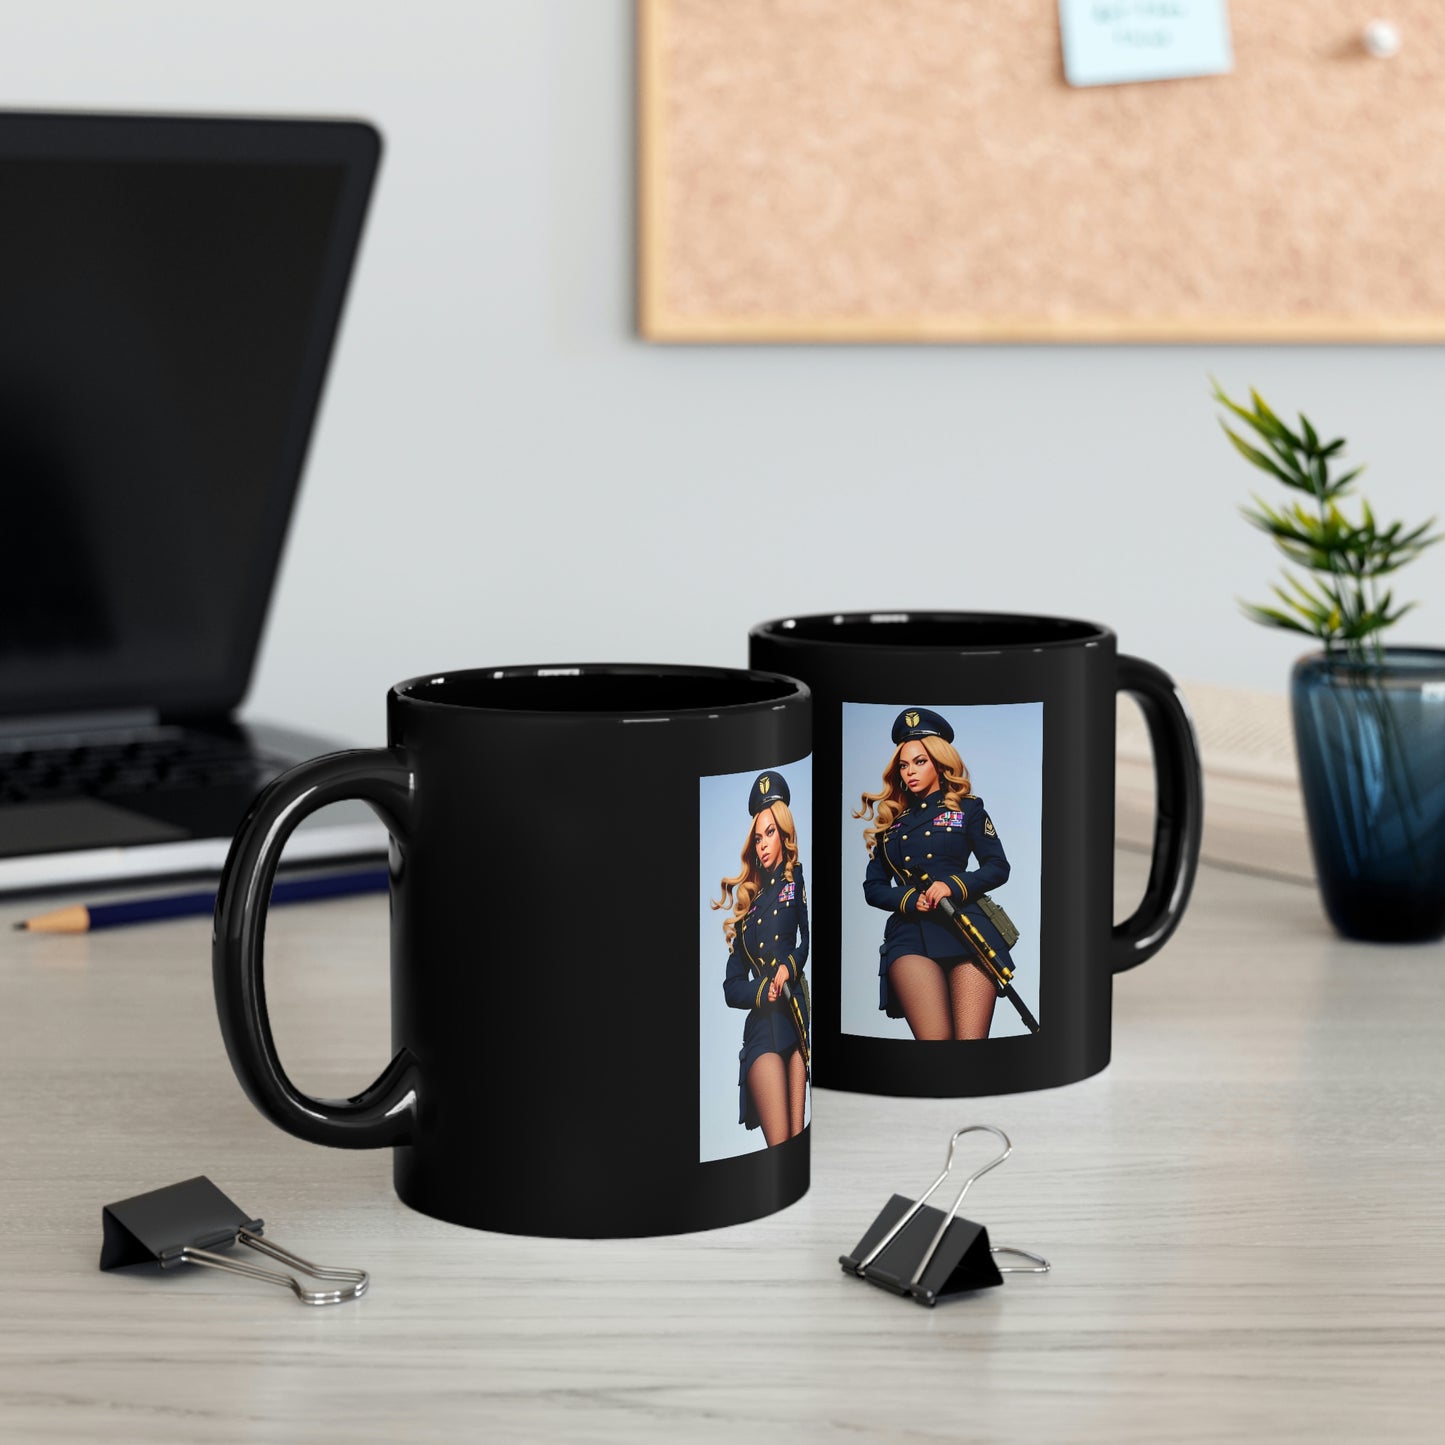 Beyonce Policy Officer Black Coffee Mug